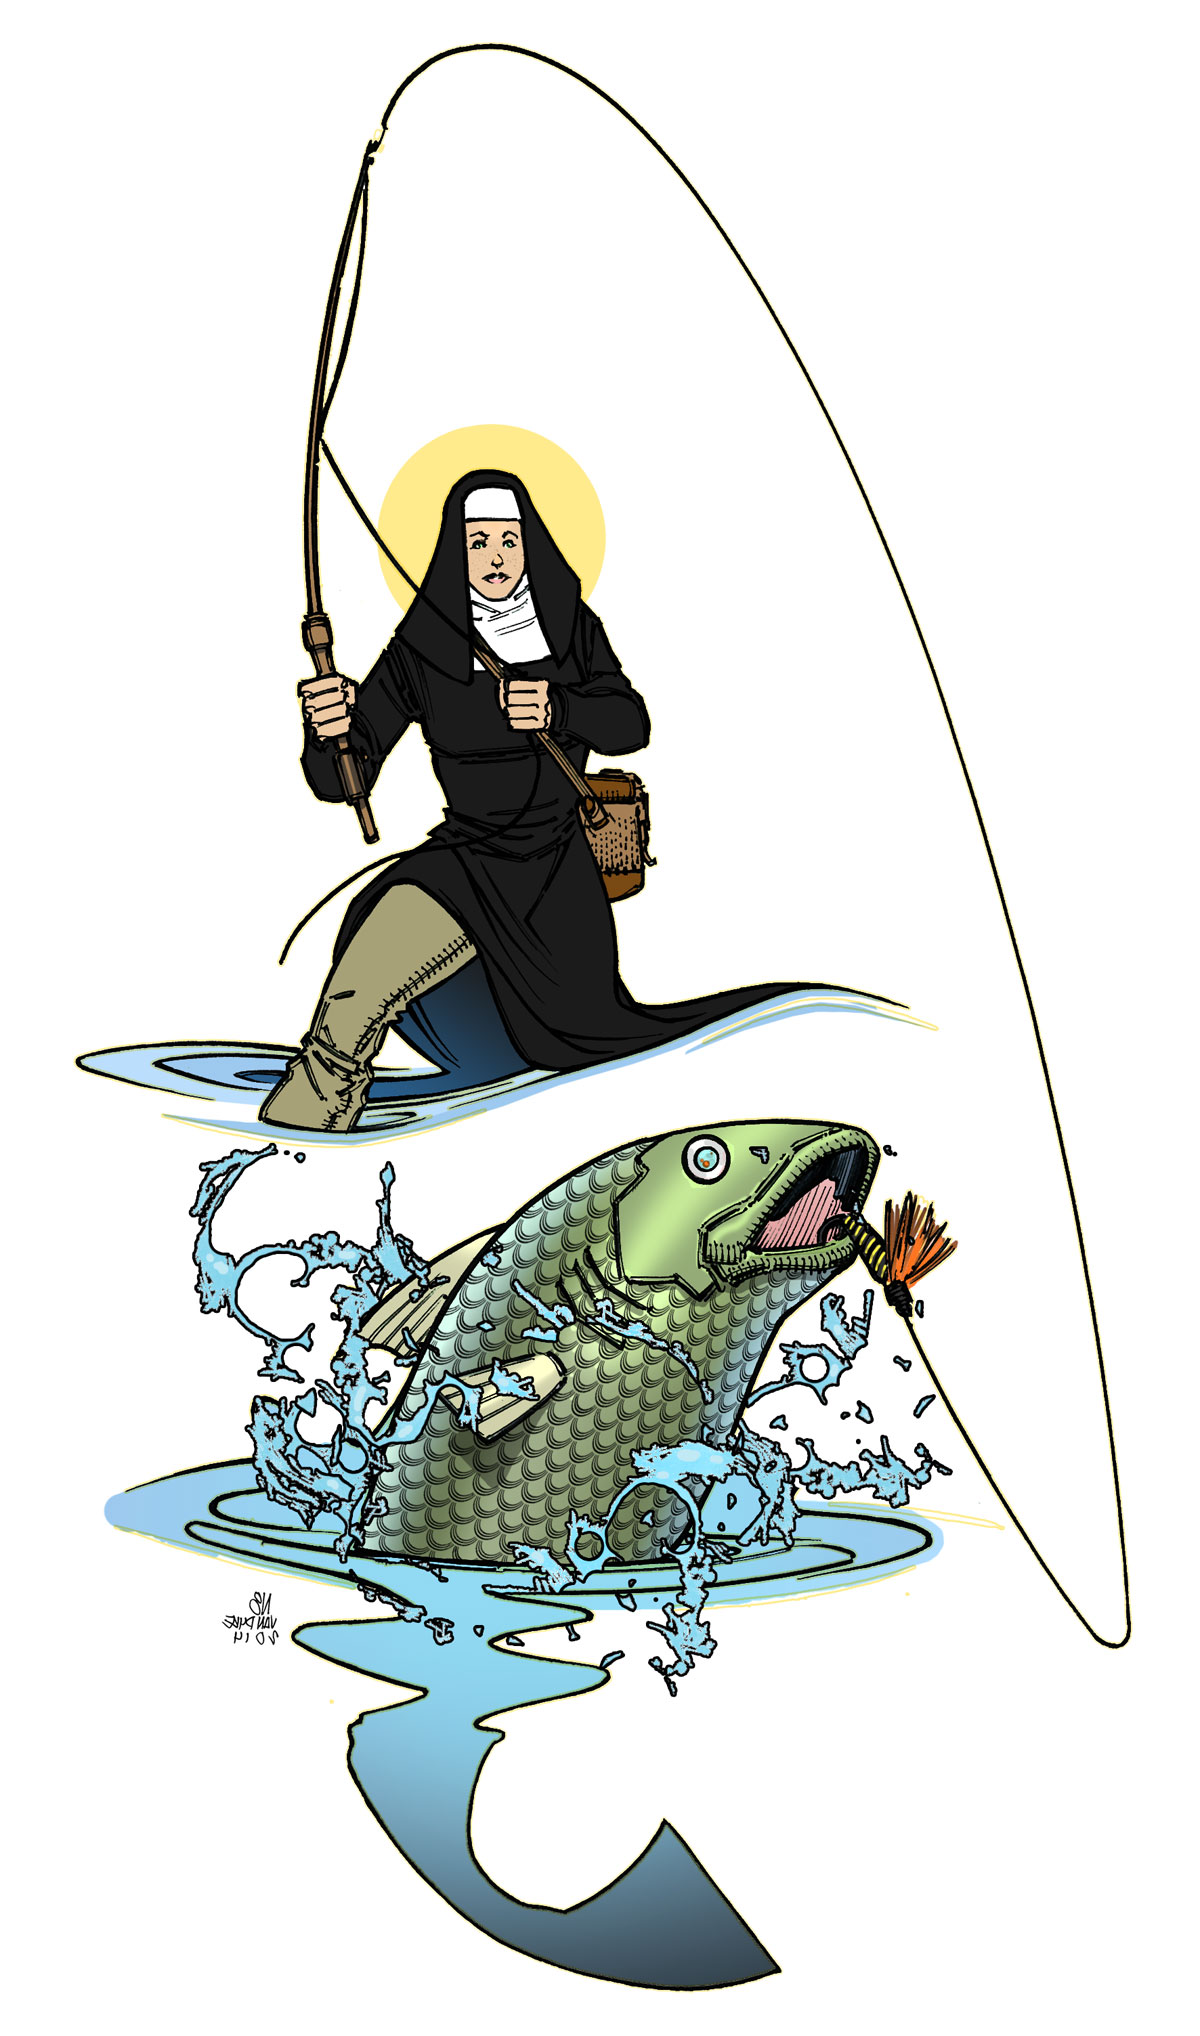 Dame Juliana Berners and the Fishing Lure